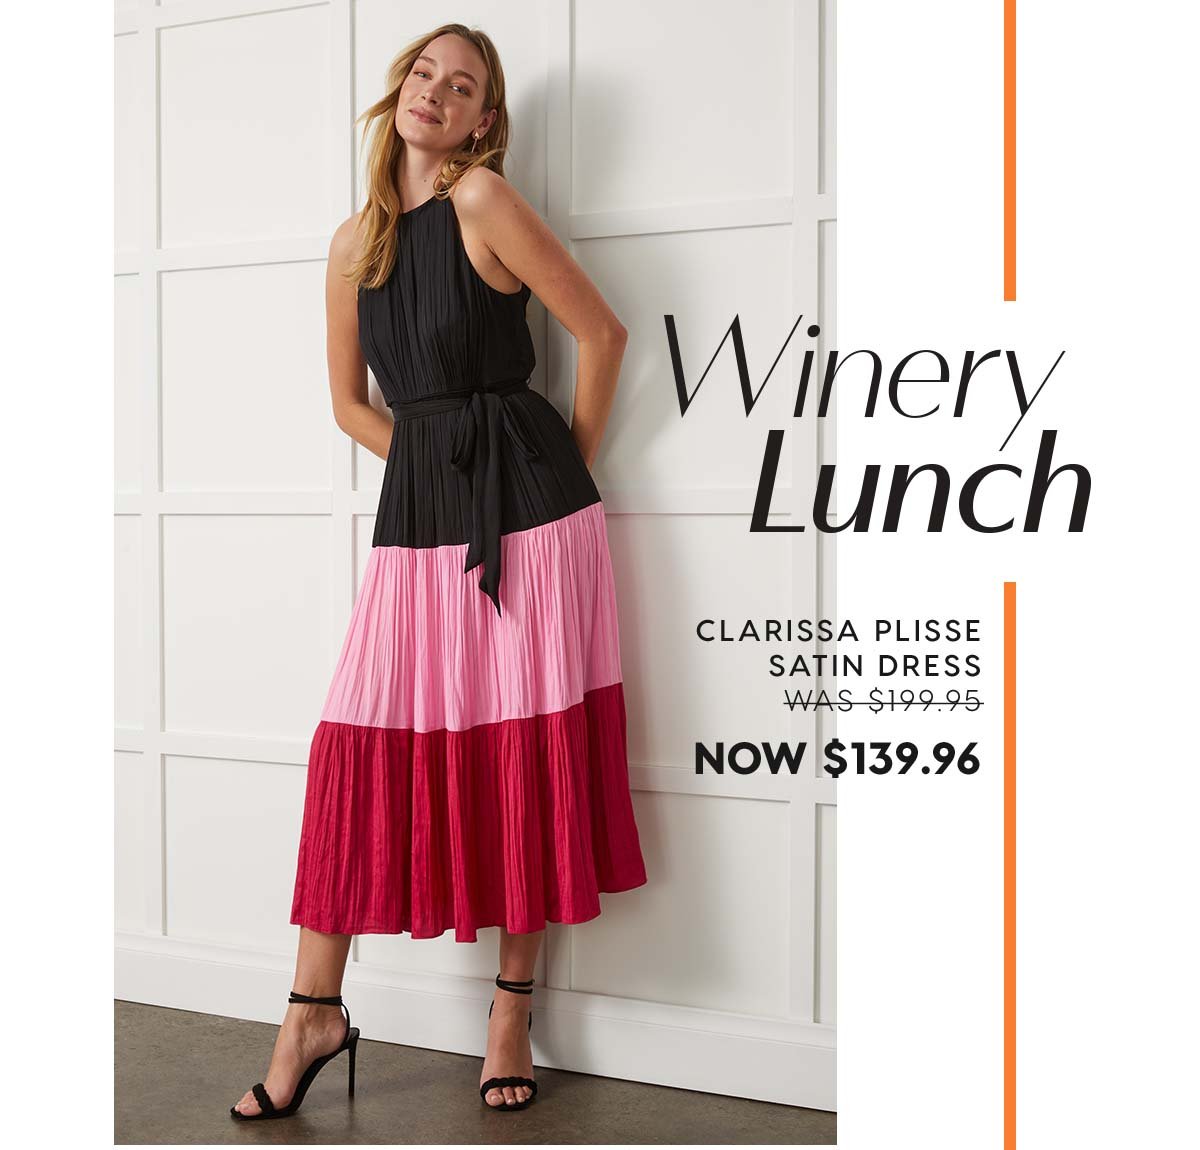 Winery Lunch. Clarissa Plisse Satin Dress WAS $199.95 NOW $139.96